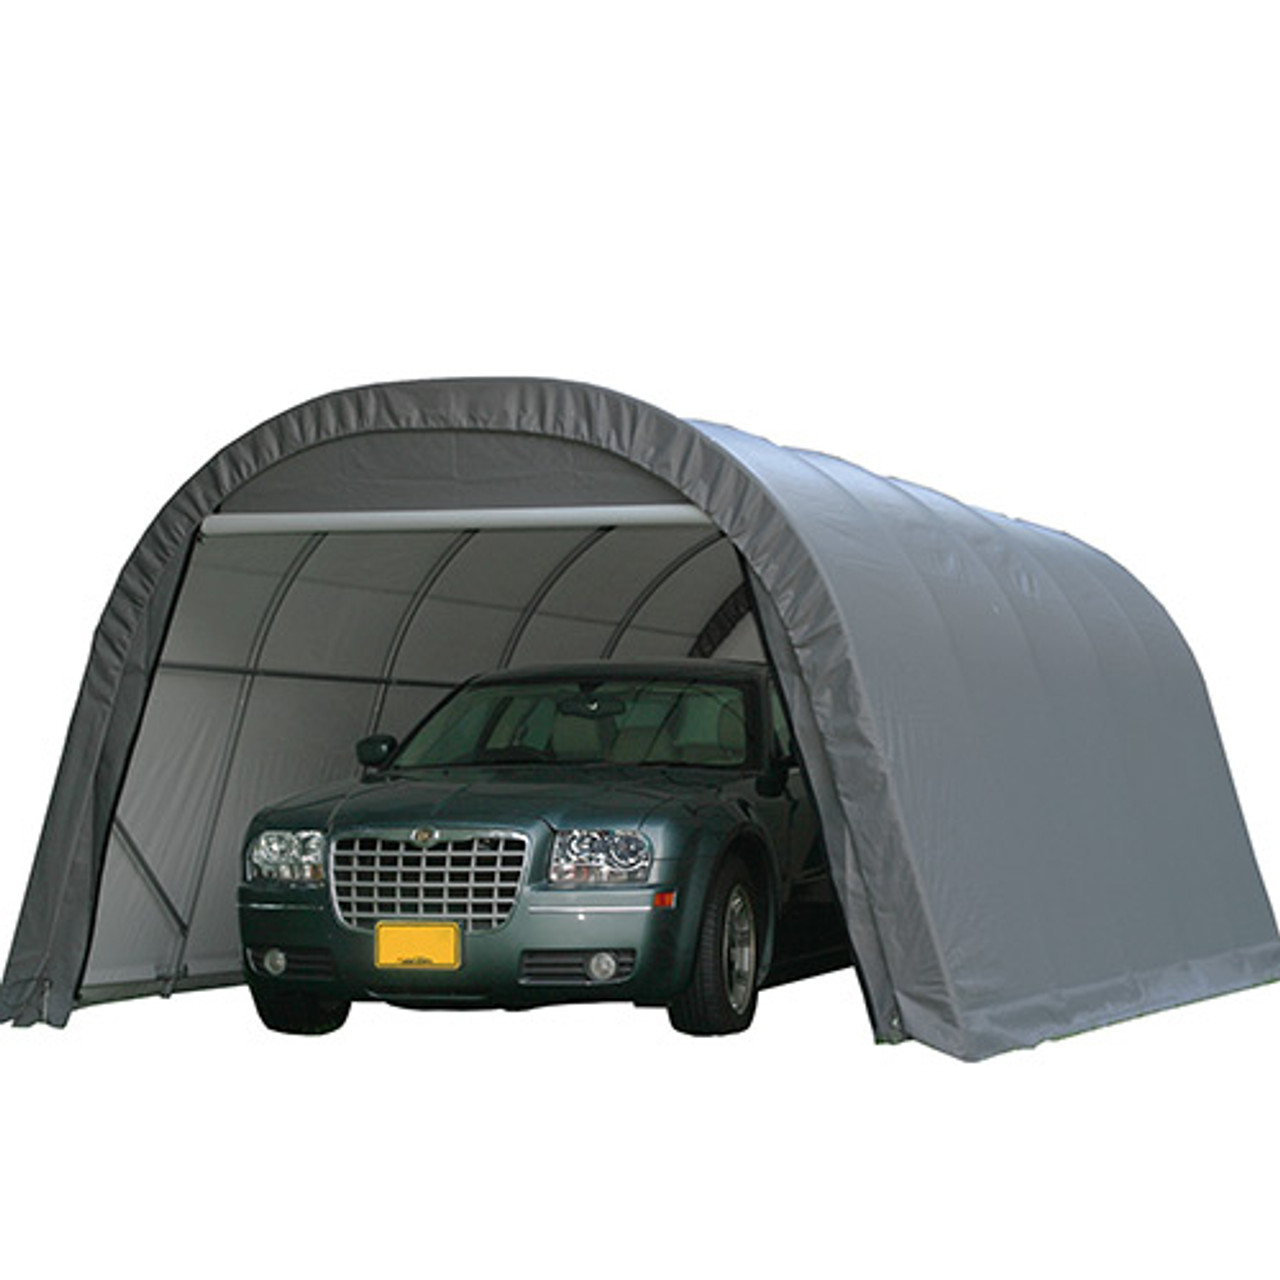 12' X 24' X 8' Round Portable Garage Canopy